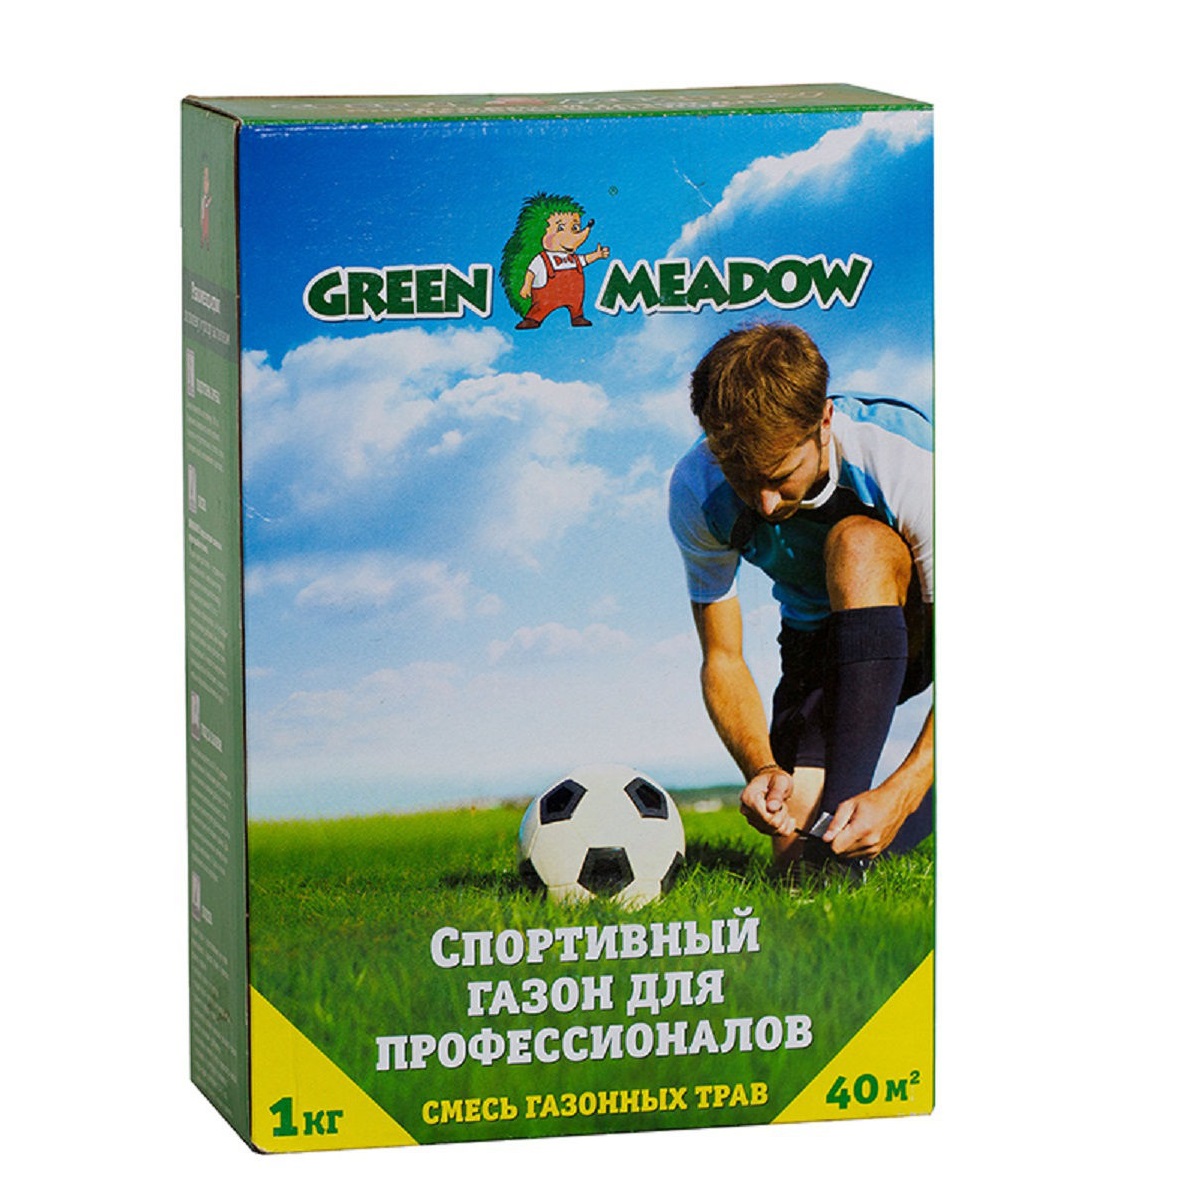 фото Газон green meadow спорт для профессионалов 1 кг